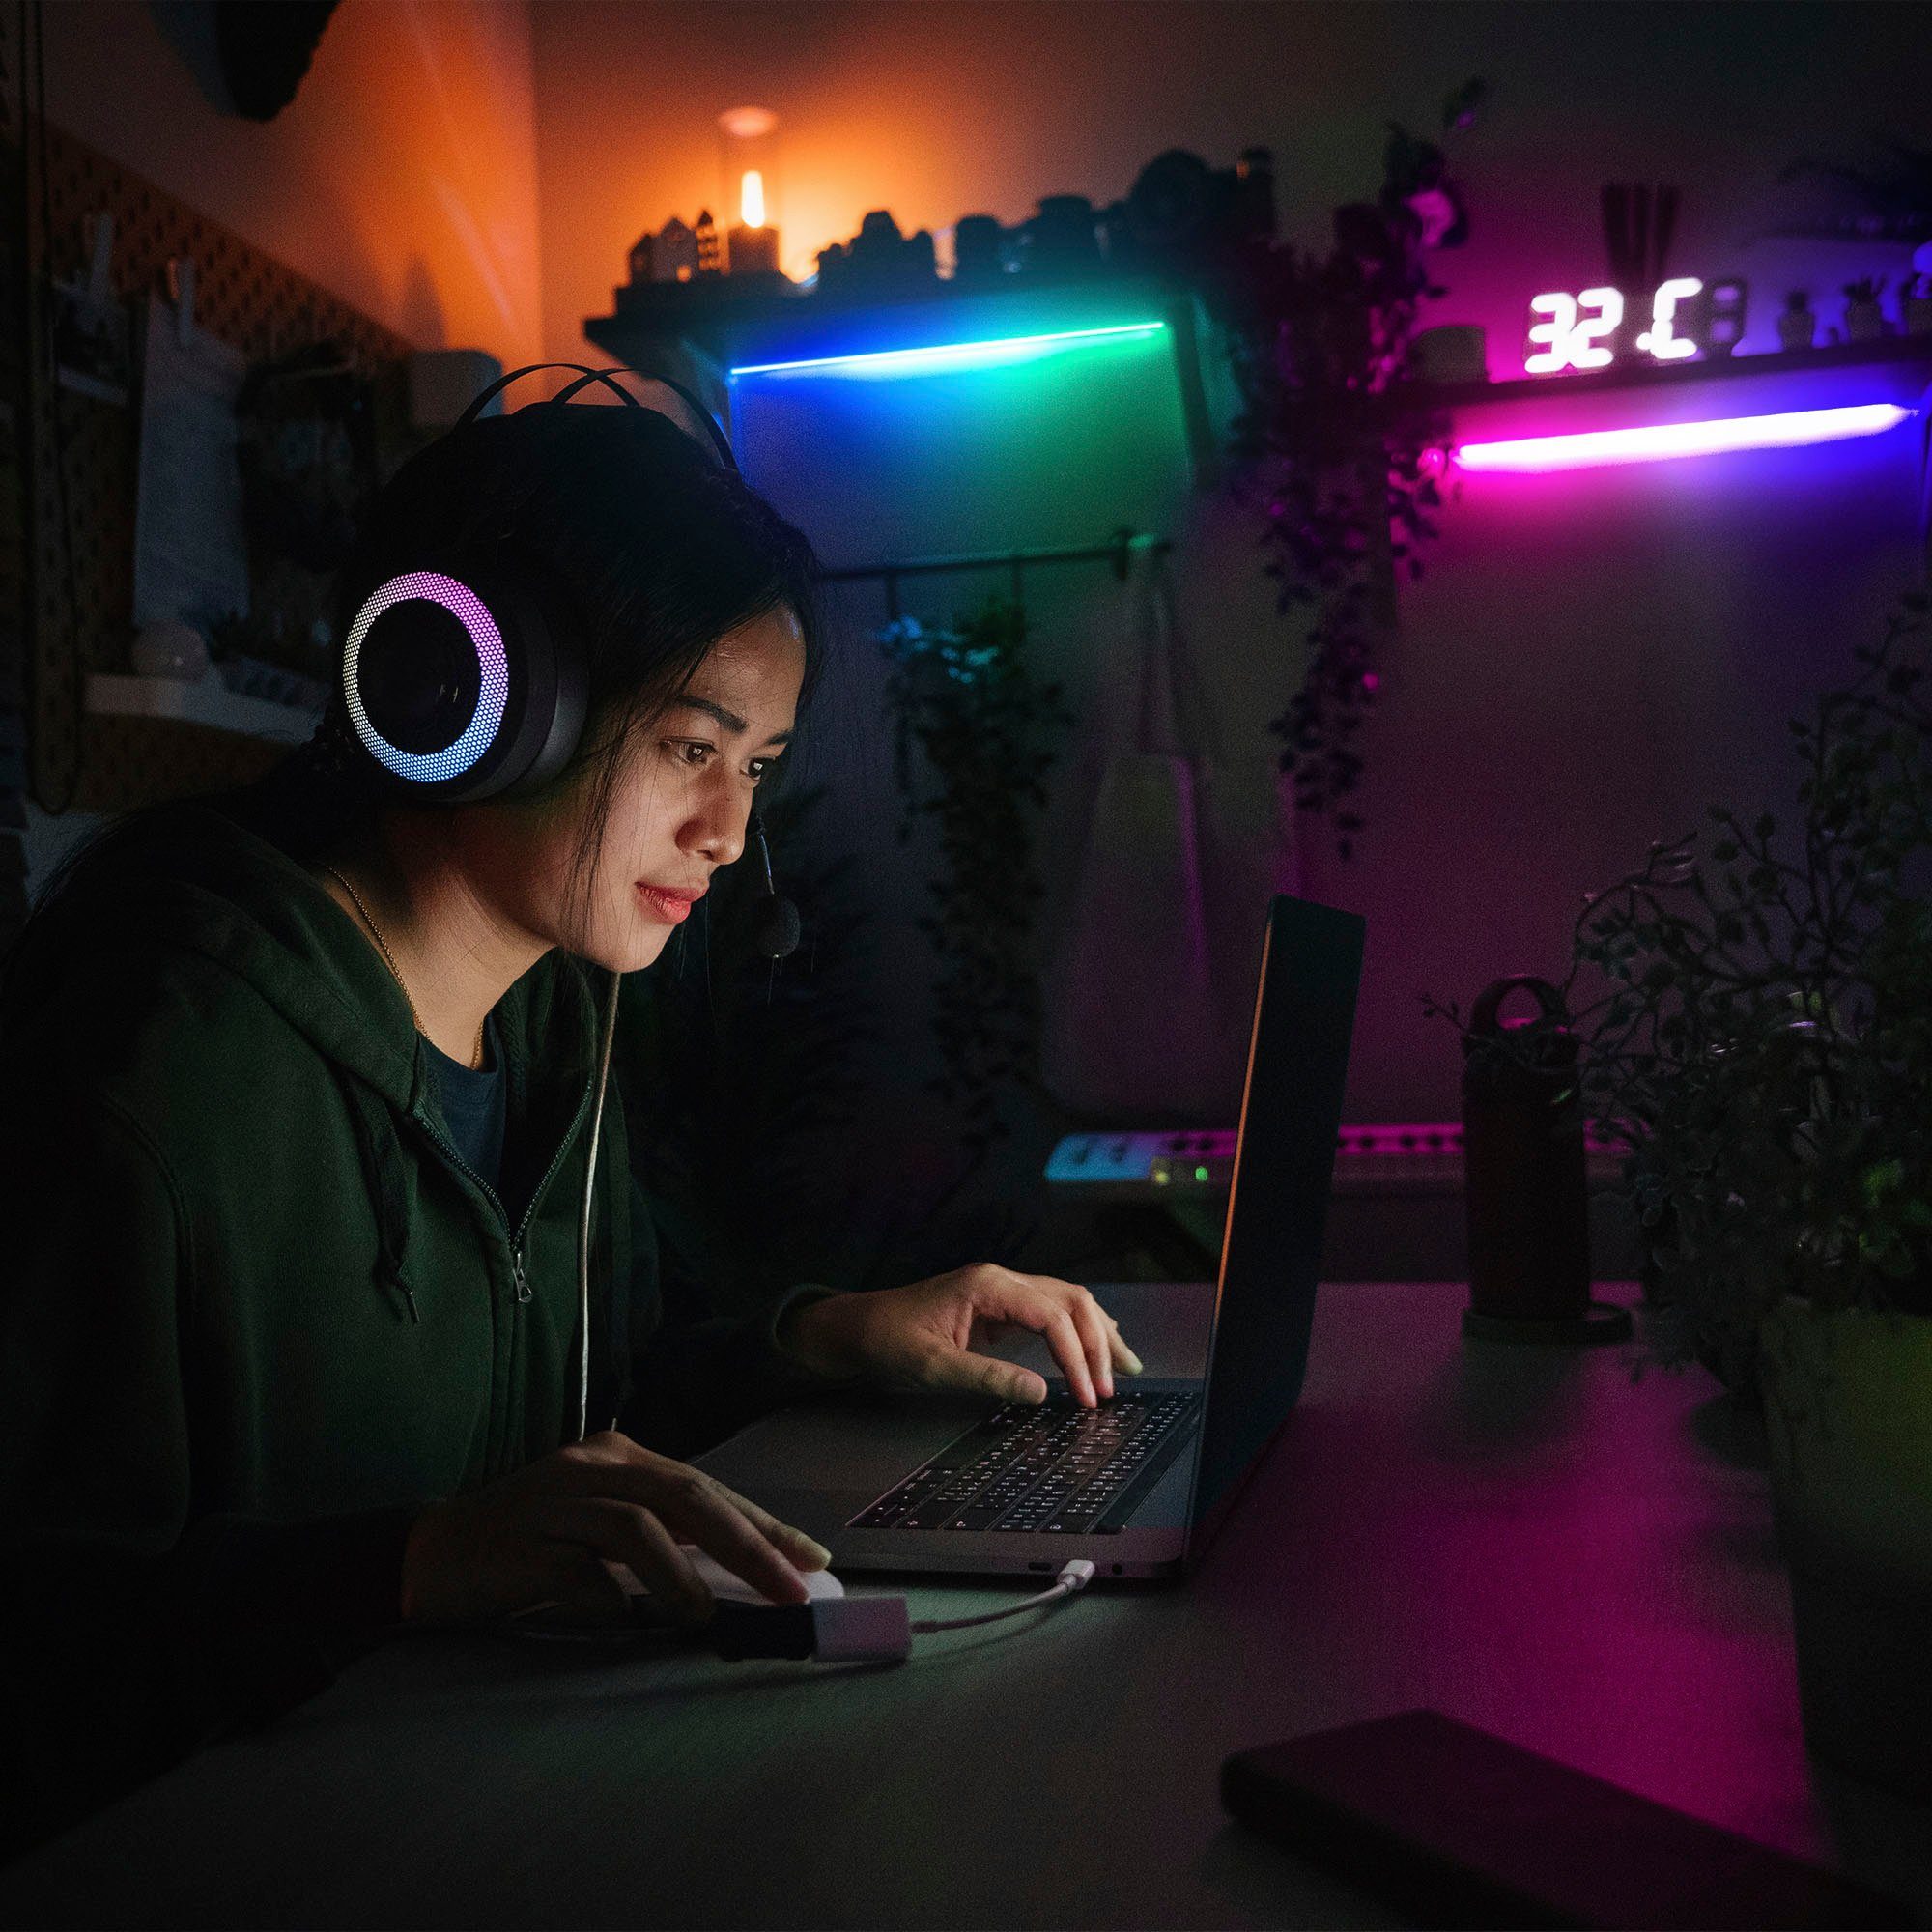 B.K.Licht LED-Streifen Lichtleiste, RGBIC, Band, Musiksensor, smartes Selbstklebend Wifi 300-flammig, mit LED